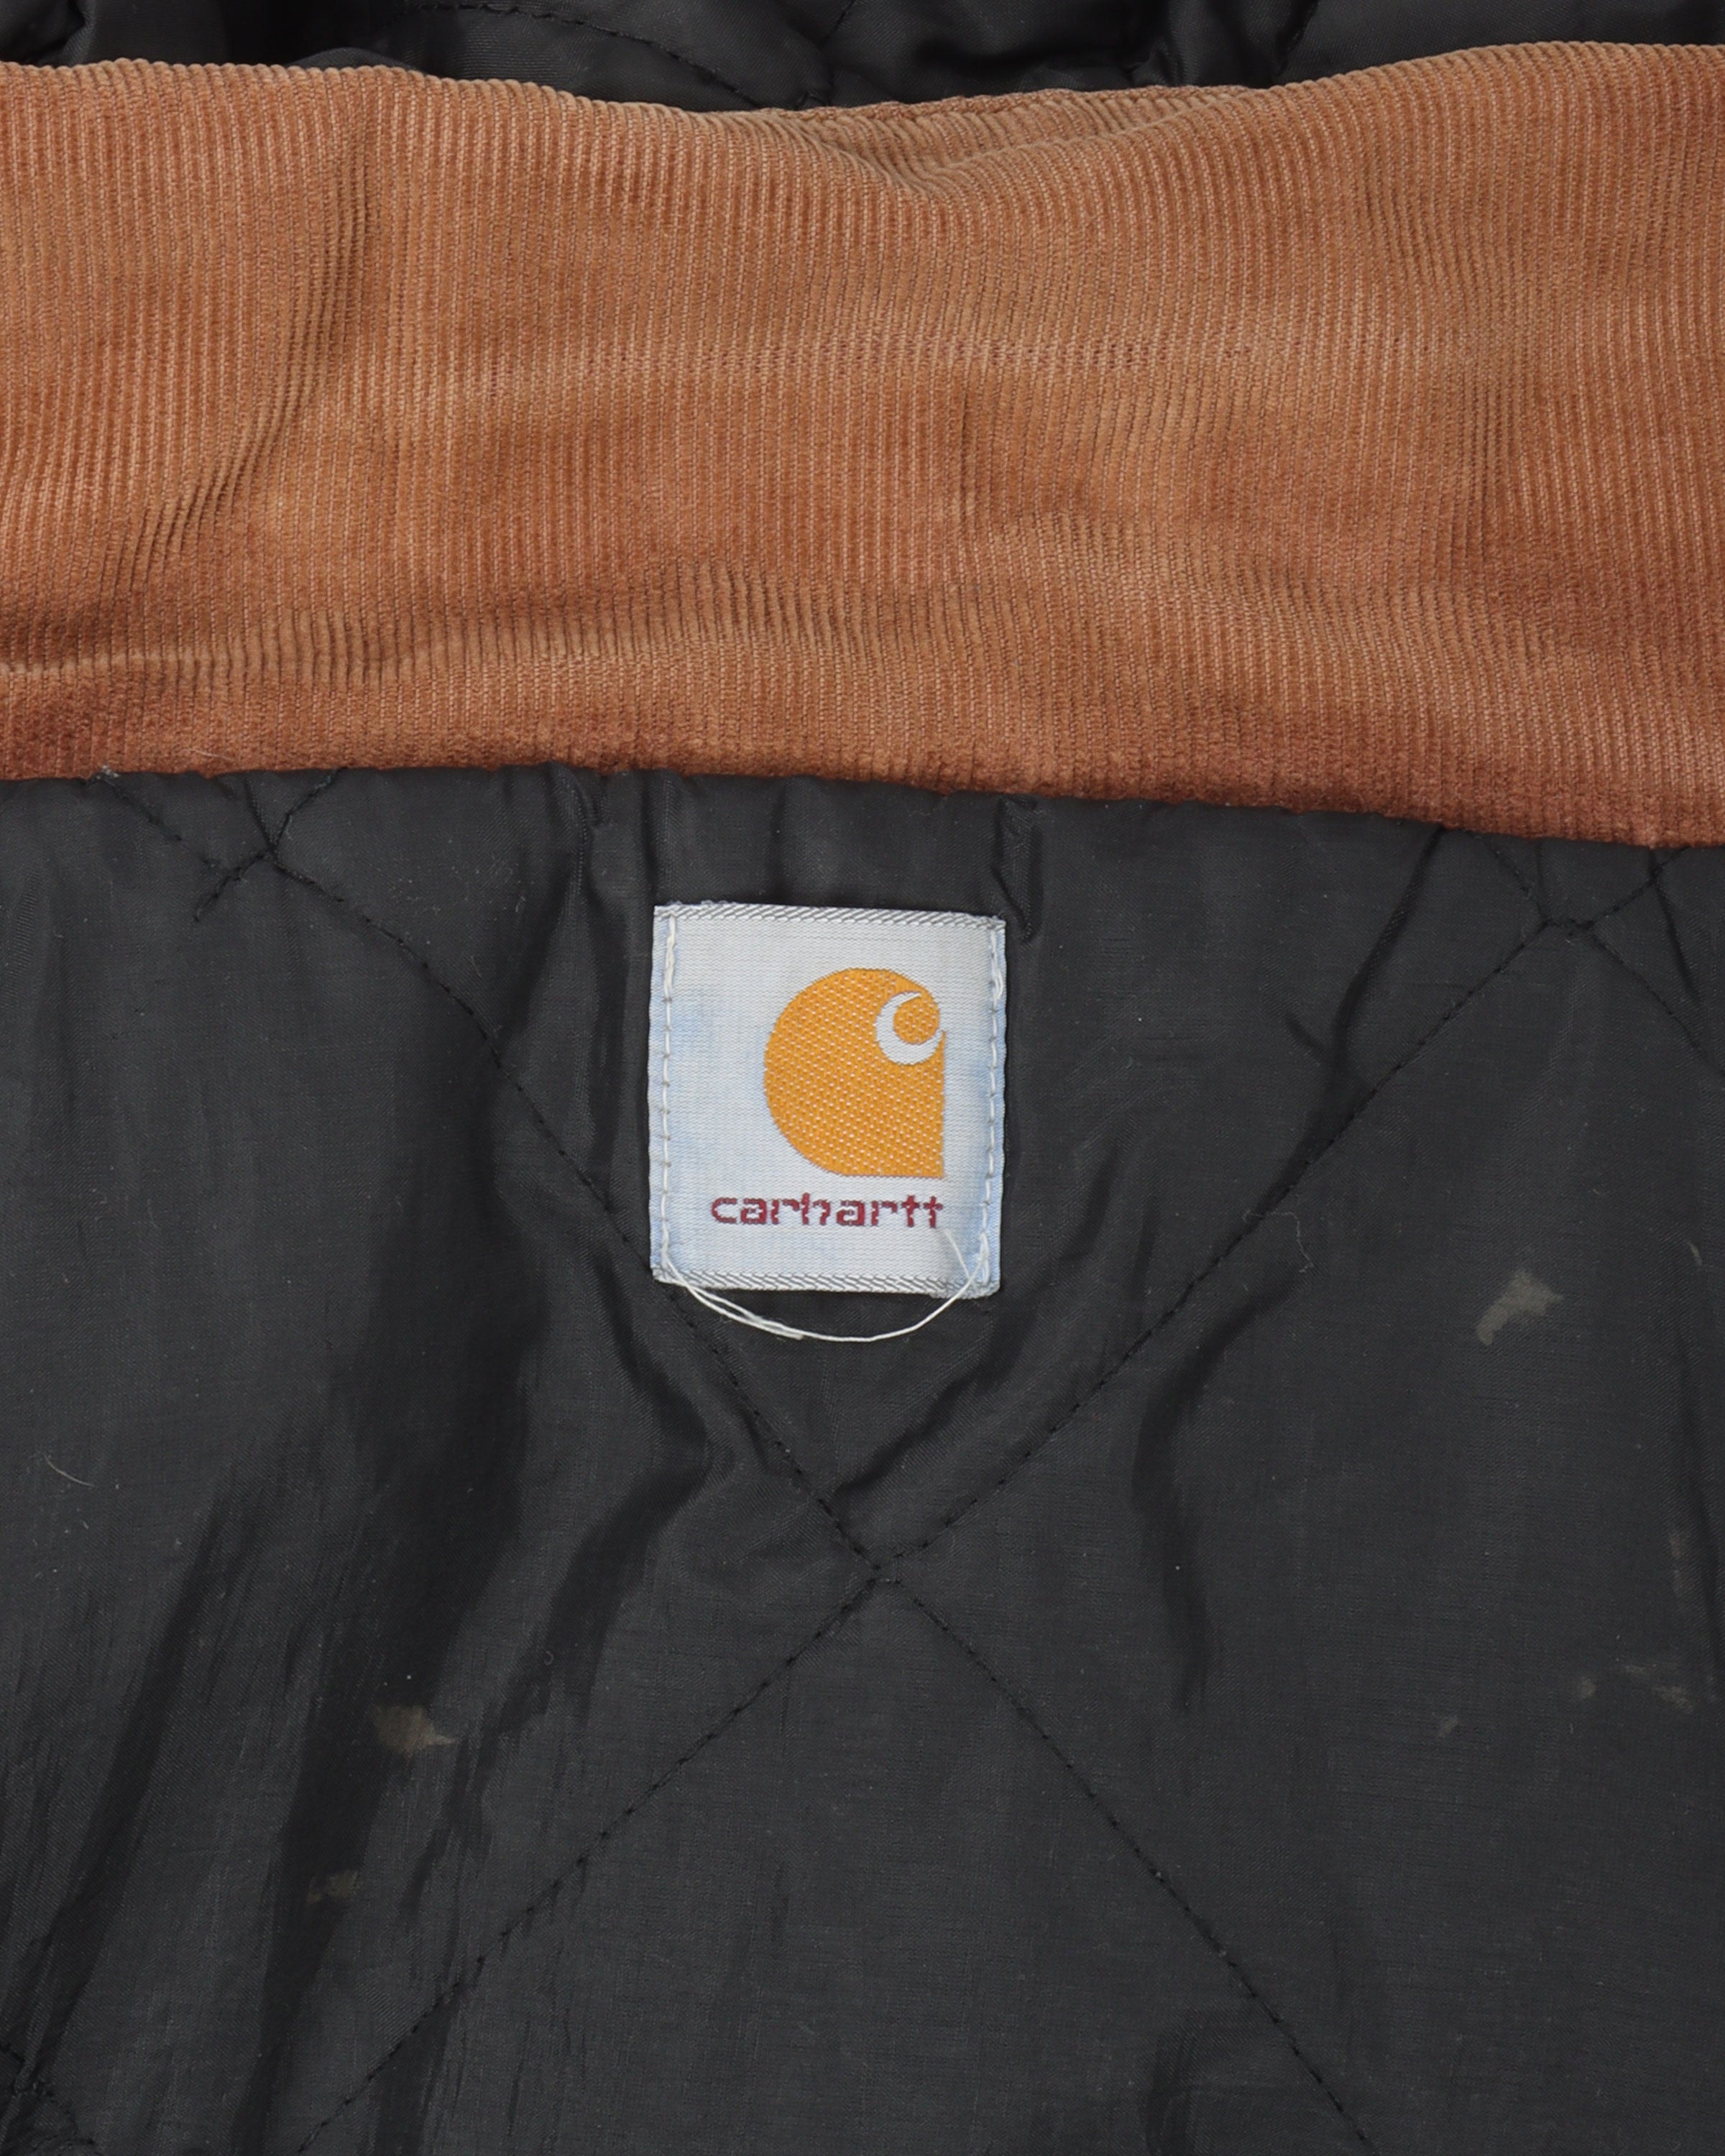 Carhartt Removable Hood Jacket